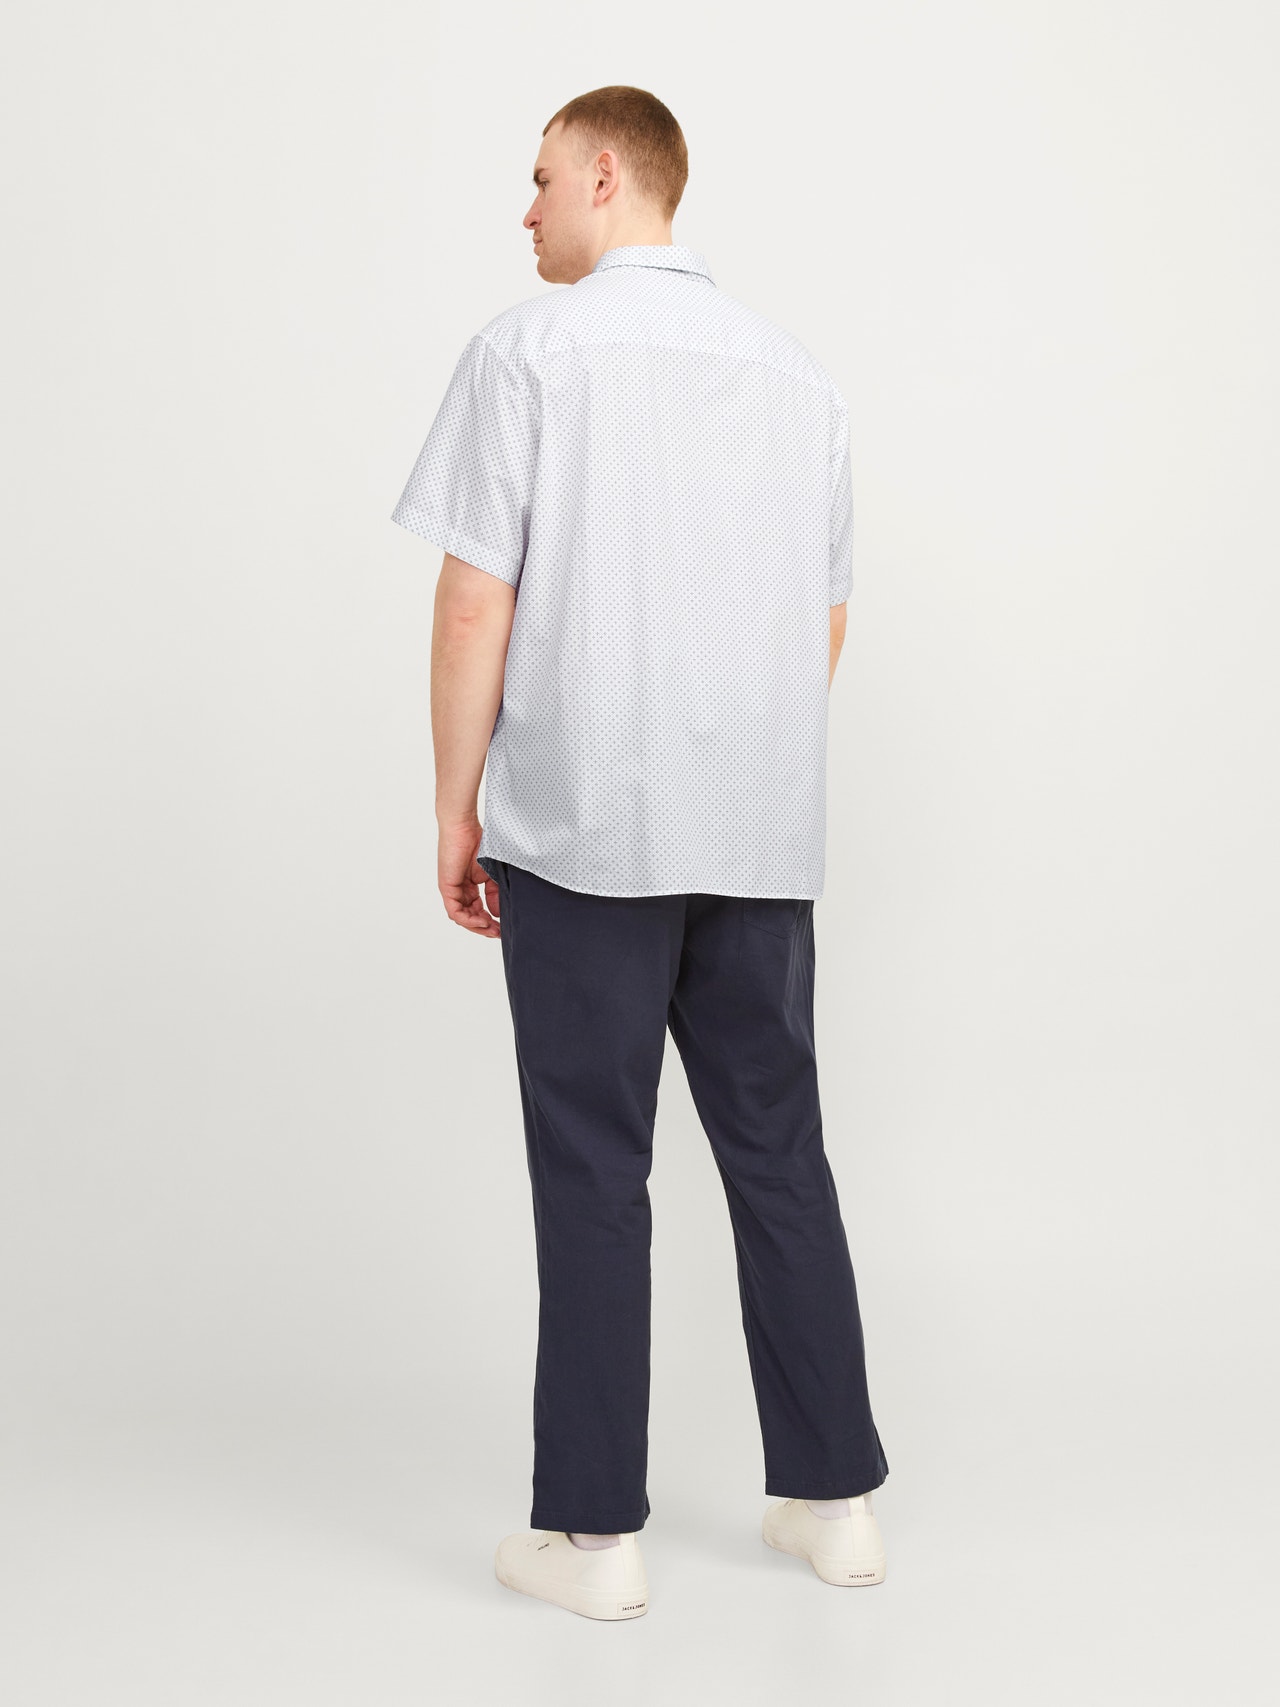 Jack & Jones Plus Size Camisa Slim Fit -White - 12254851